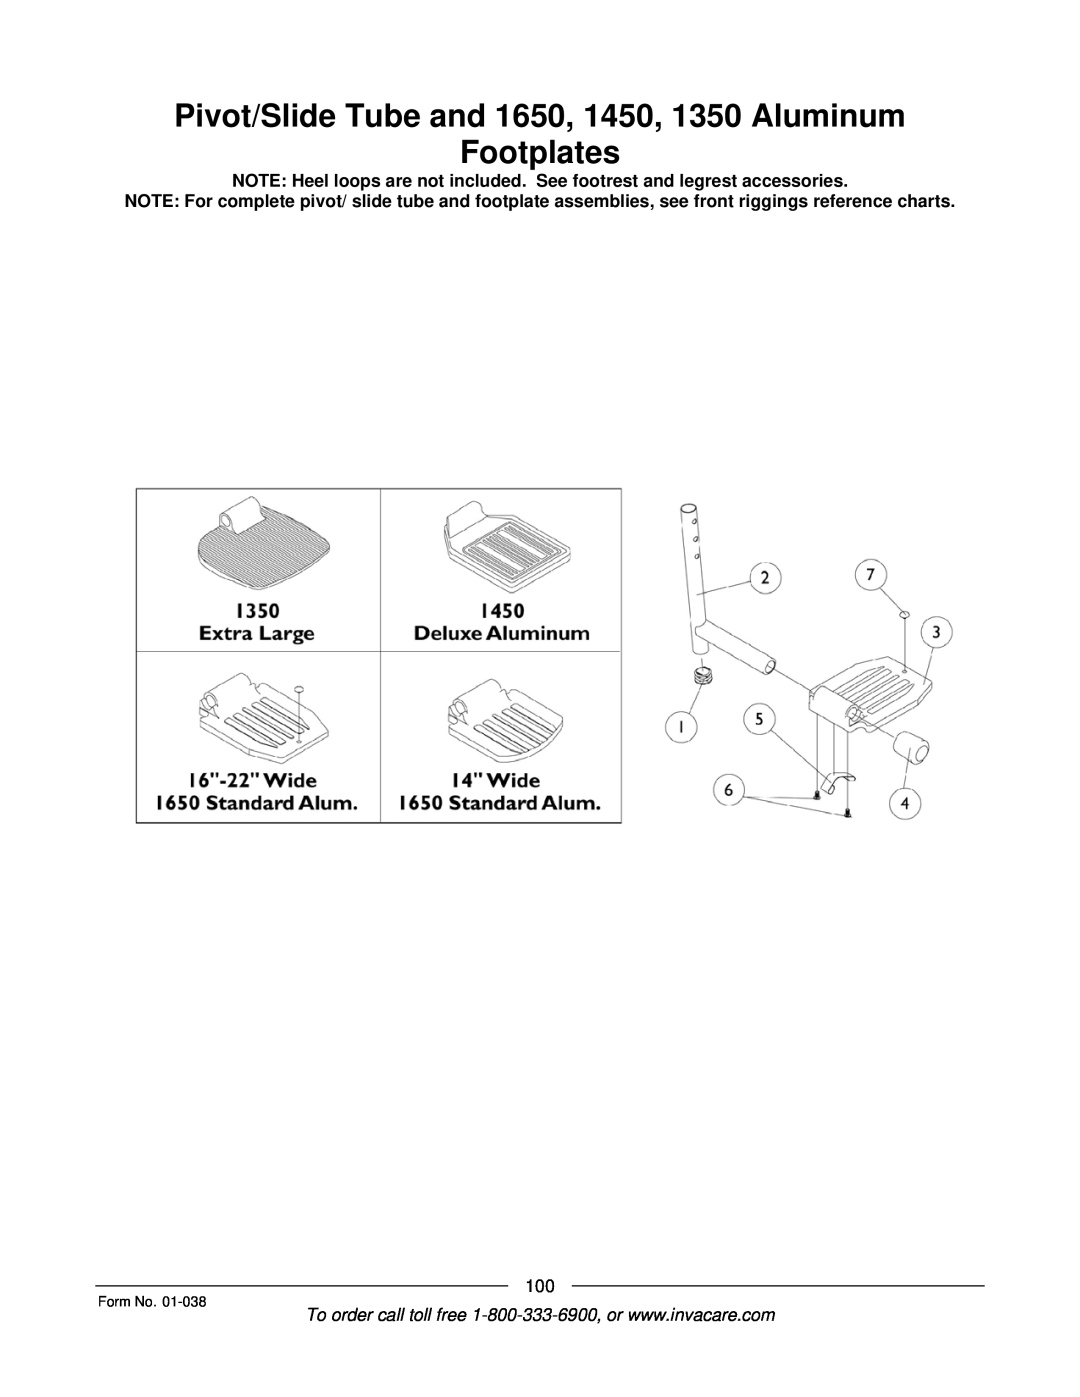 Invacare ESS-PTO, PTO-STM manual Pivot/Slide Tube and 1650, 1450, 1350 Aluminum Footplates, Form No 